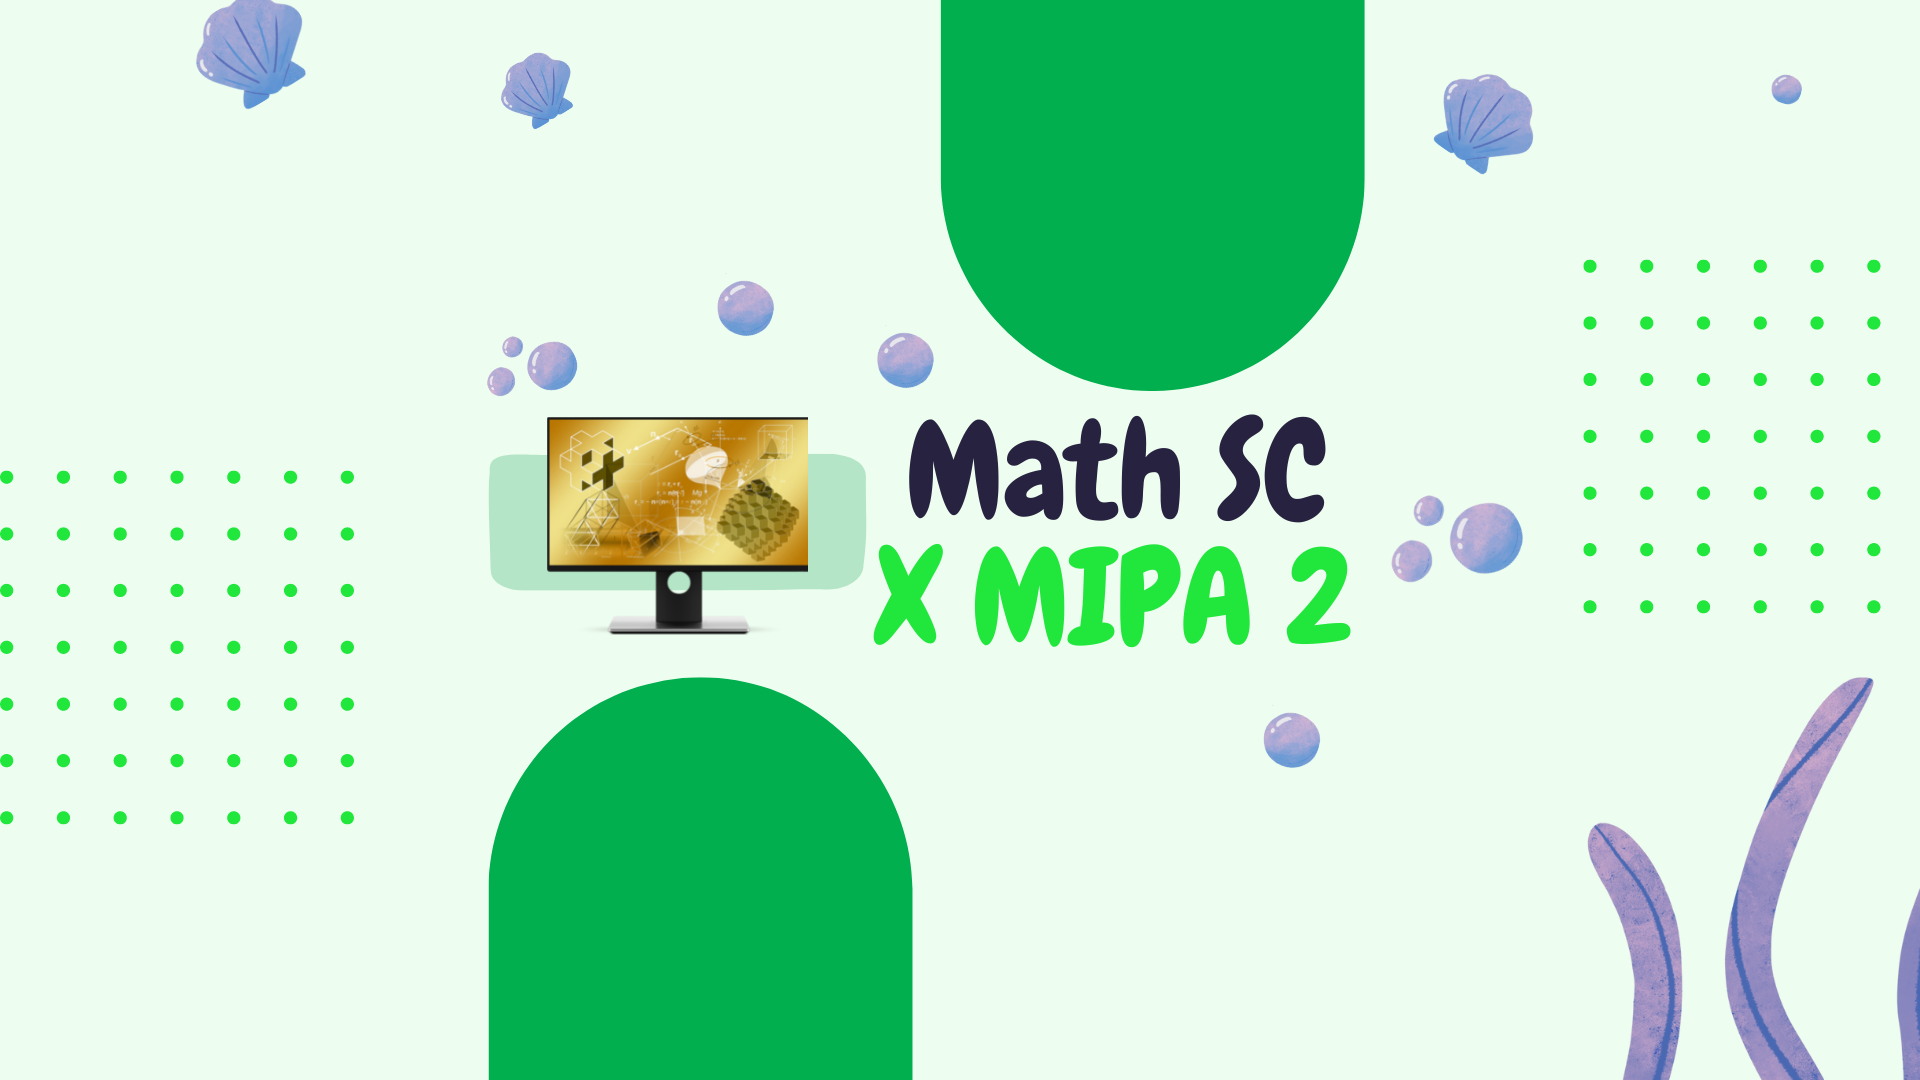 MATH SCIENCE X MIPA 2